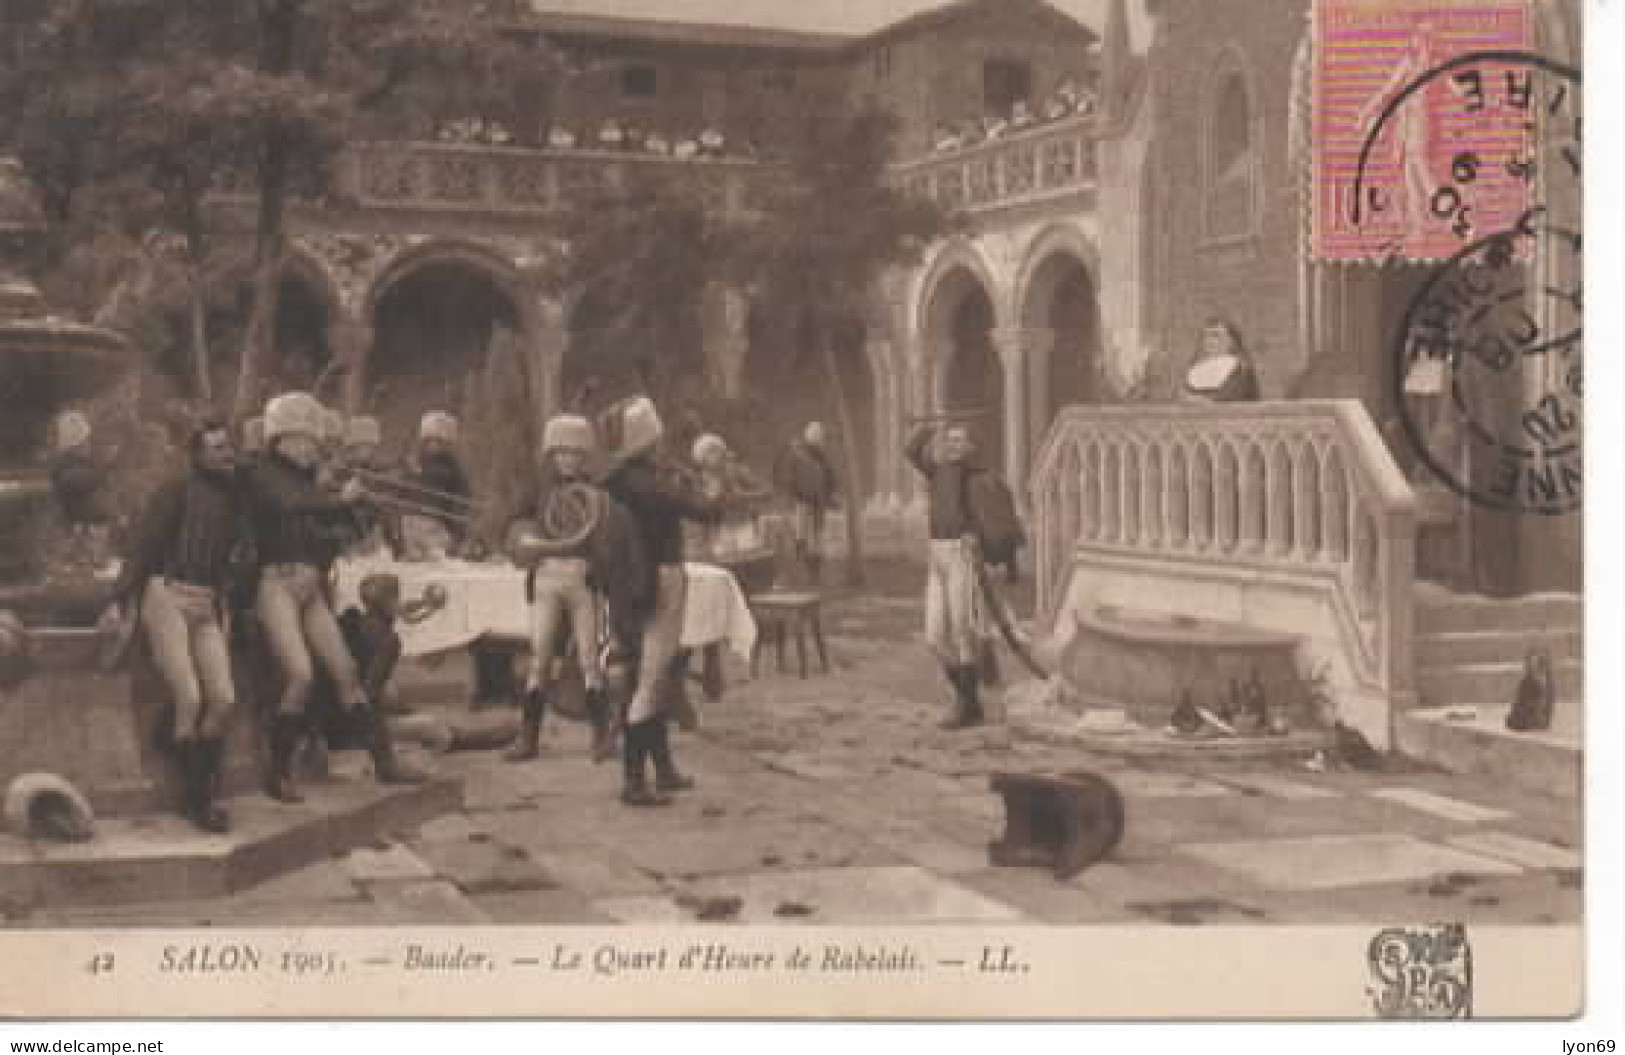 SALON 1905 42 BAADER  LE QUARD  D HEURE  DE RABELAIS - Malerei & Gemälde